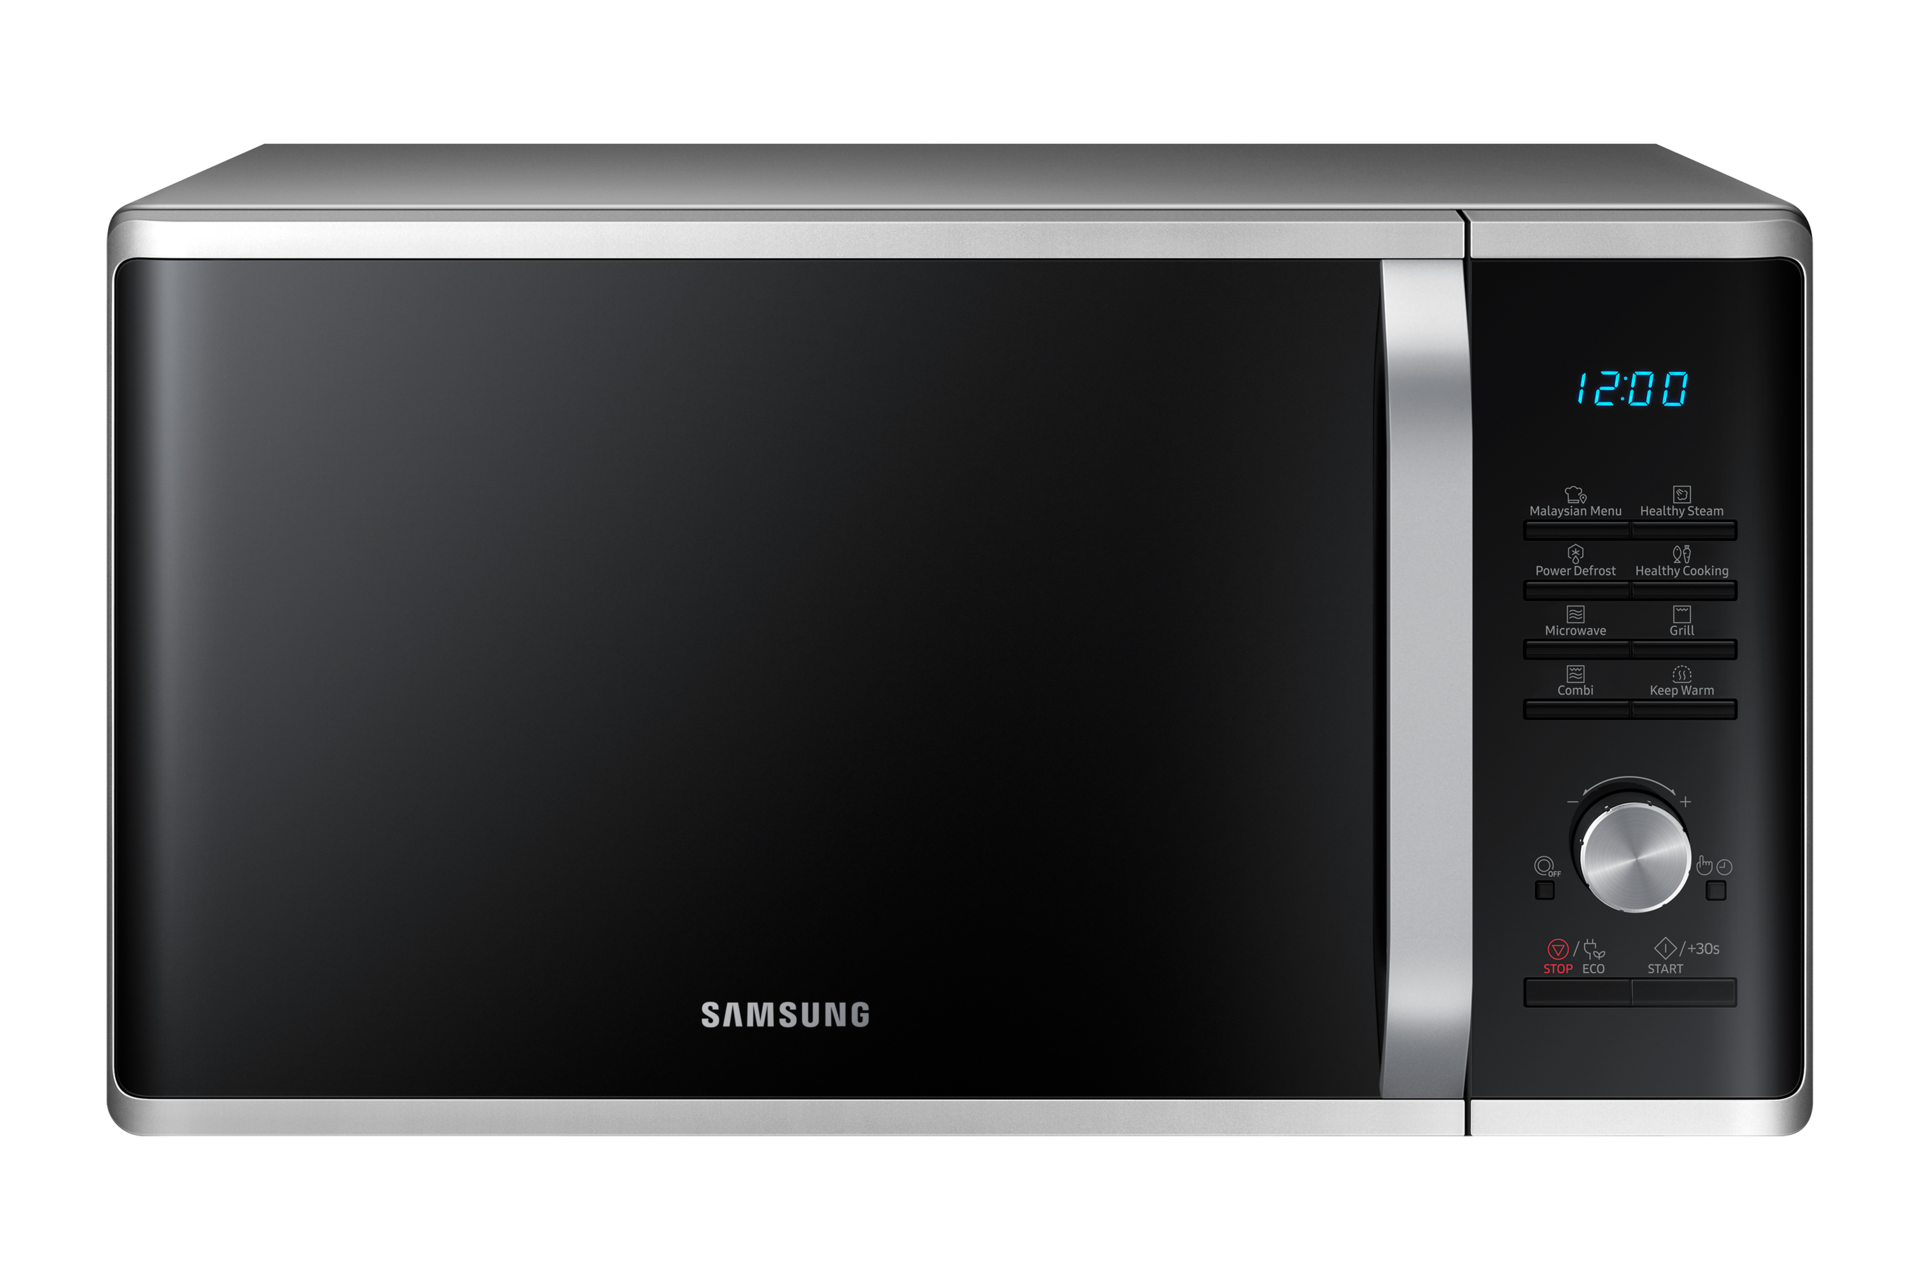 Halloween meesteres Uiterlijk Grill Microwave Oven with Healthy Steam, 28 L (MG28J5255GS/SM) | Samsung  Africa